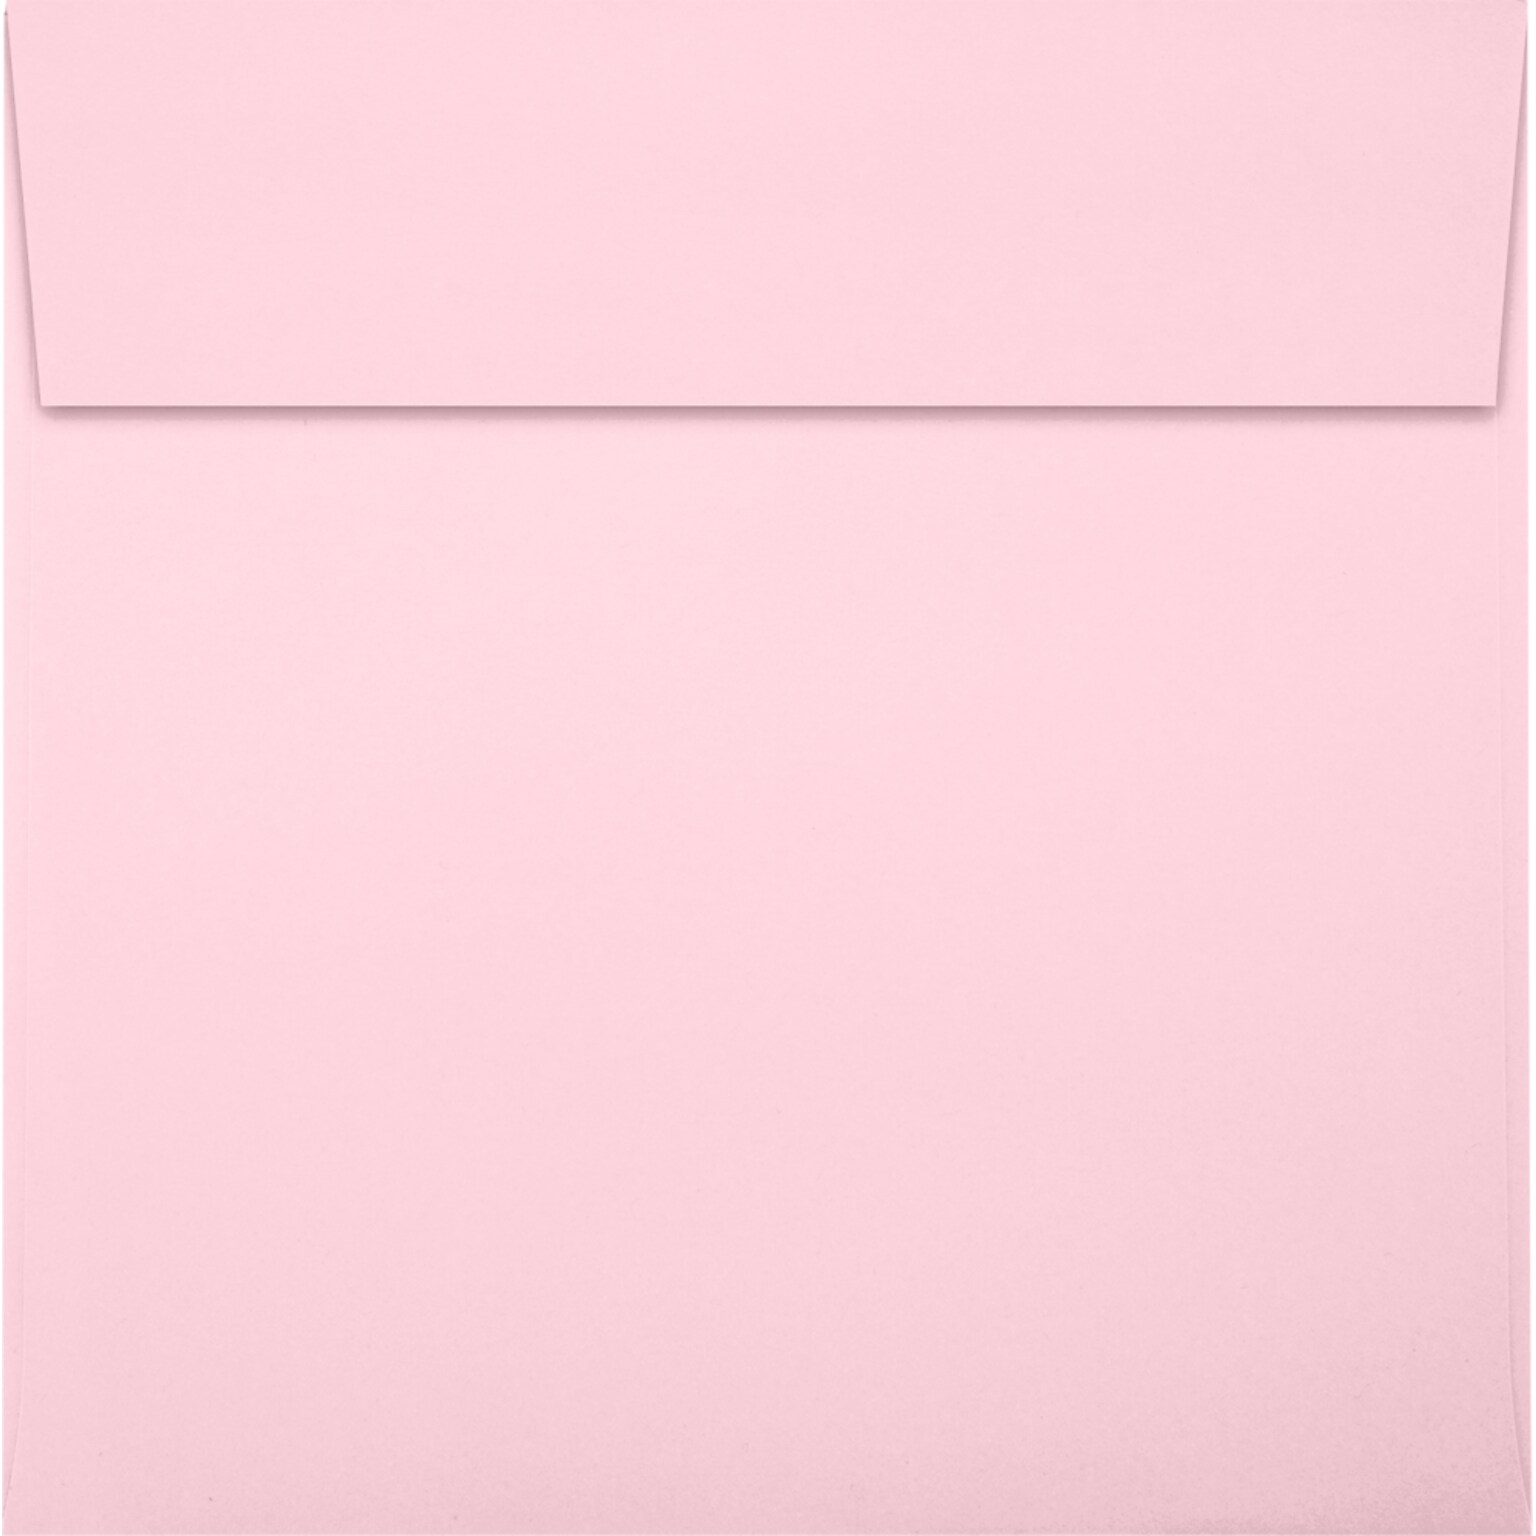 JAM Paper Square Envelopes, Peel & Press, Candy Pink, 6 1/4 x 6 1/4, 250 Pack (8530-23-250)